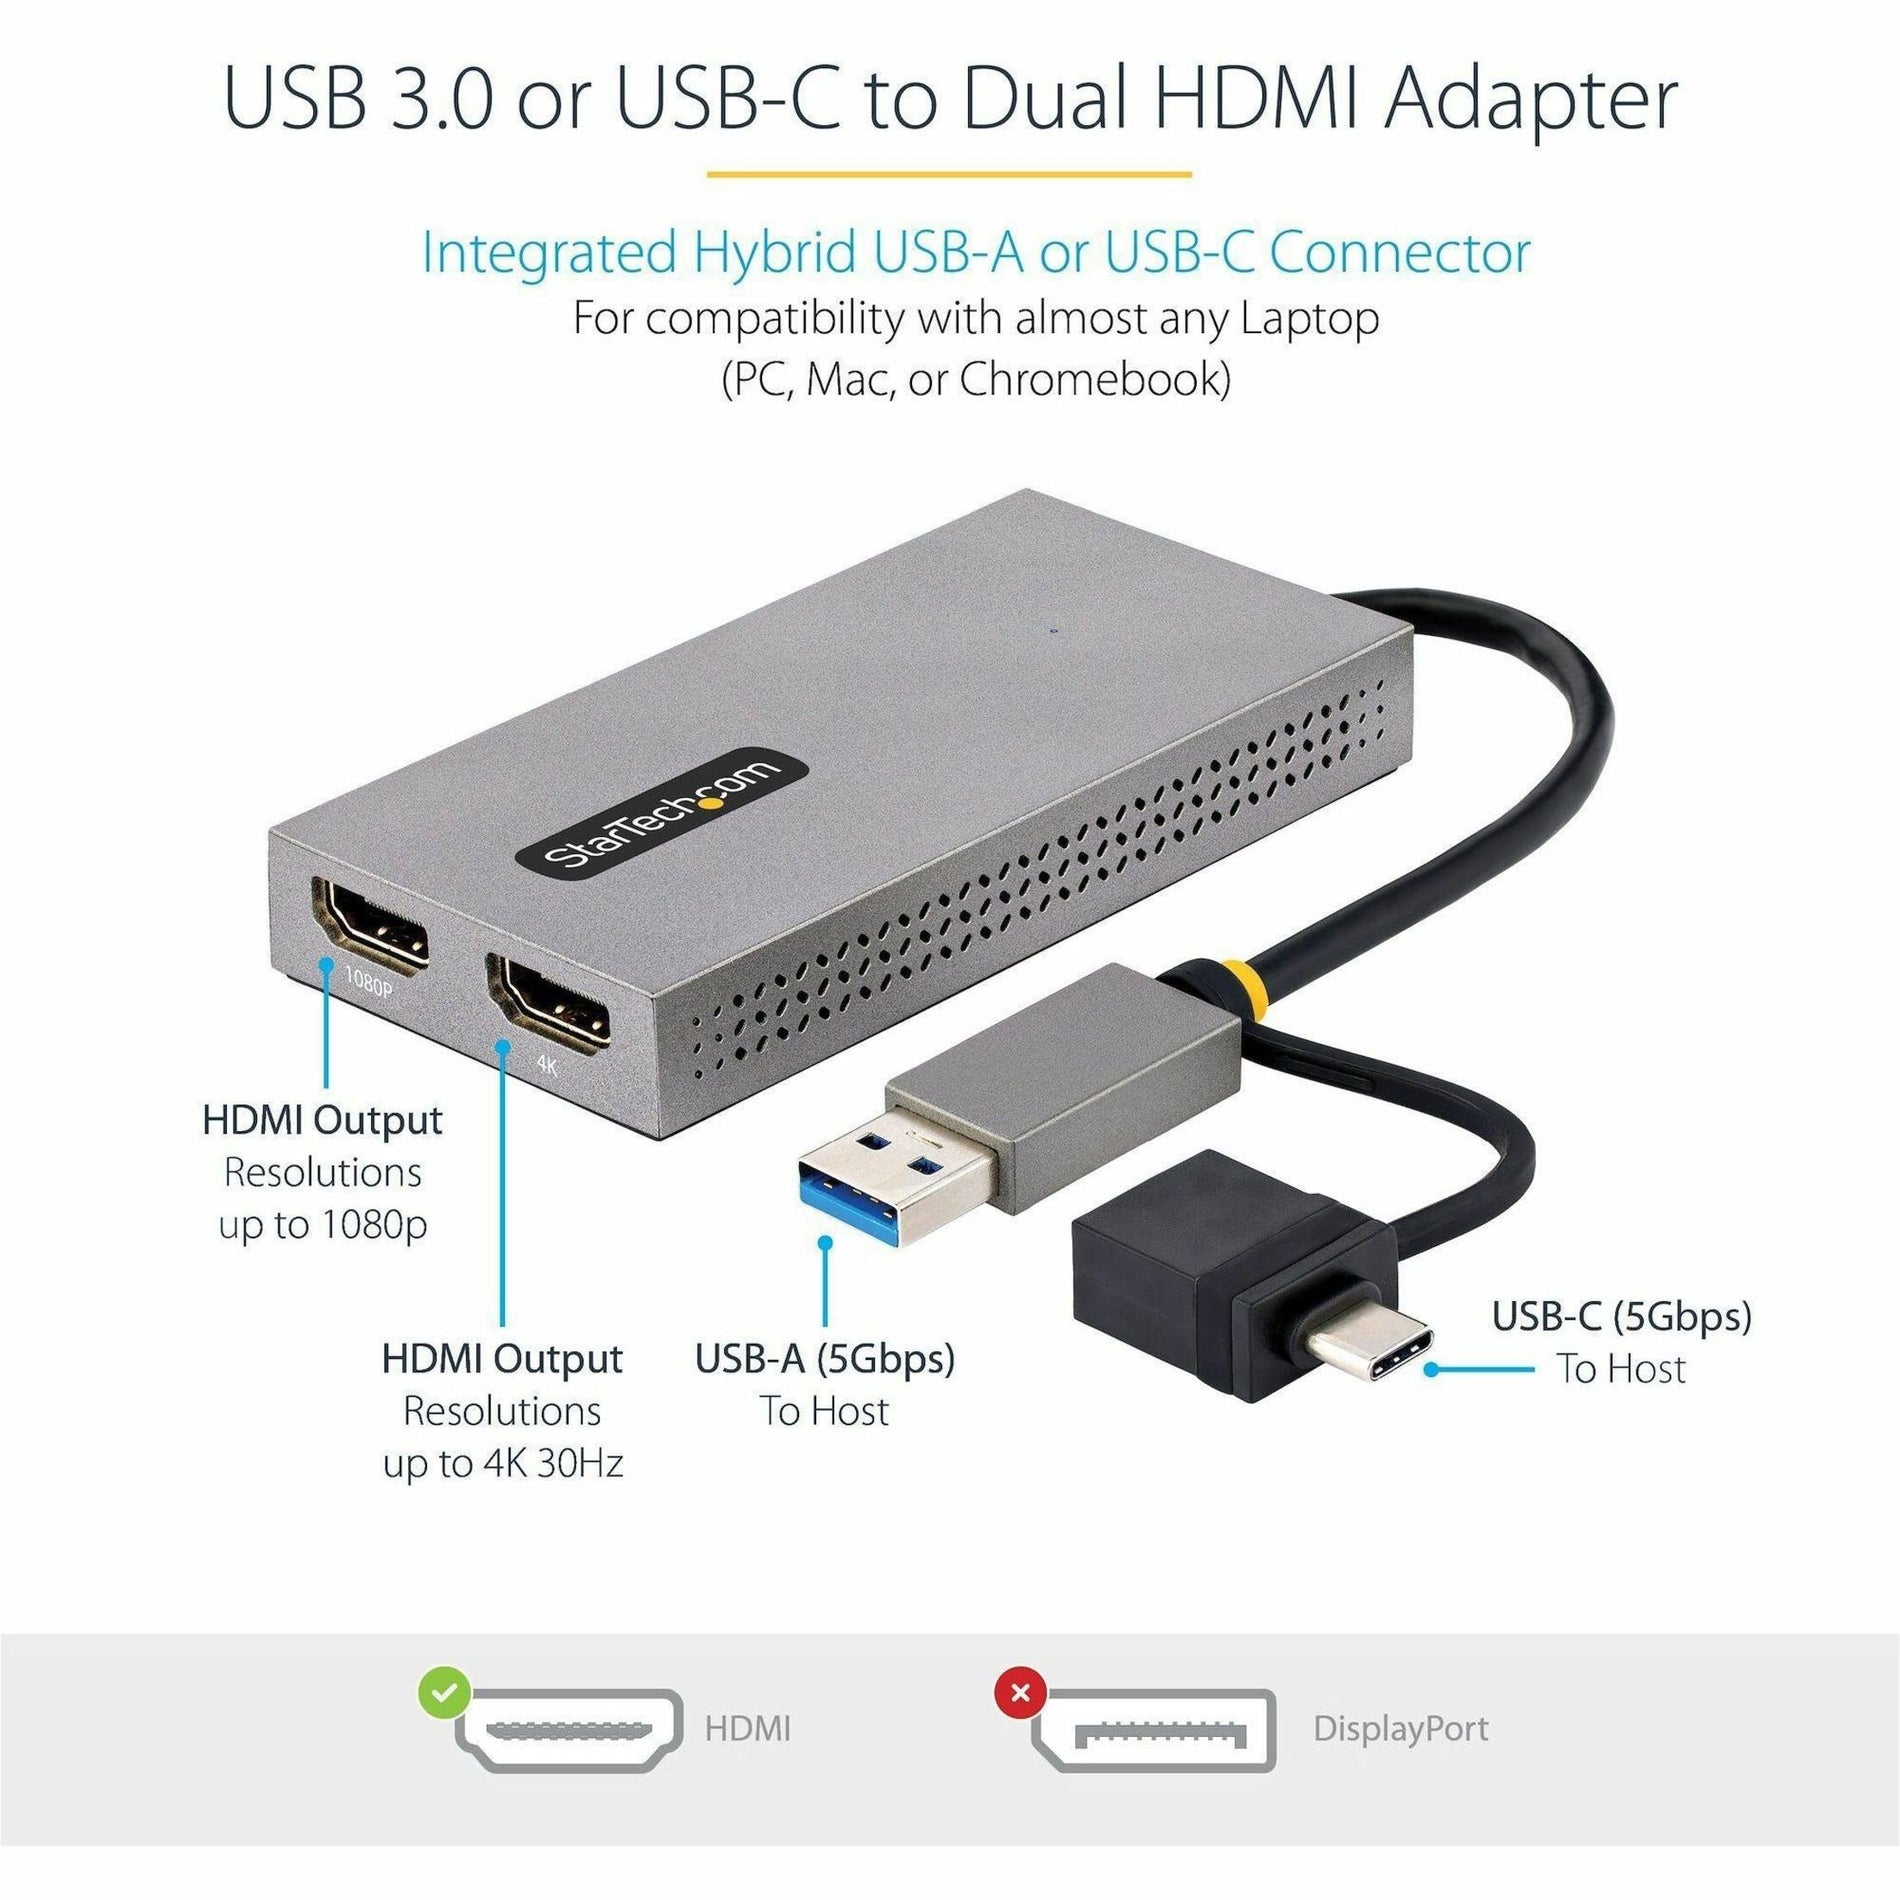 StarTech.com 107B-USB-HDMI USB-A/USB-C to Dual HDMI Adapter, 4K 30Hz, 1080P, LED Indicator